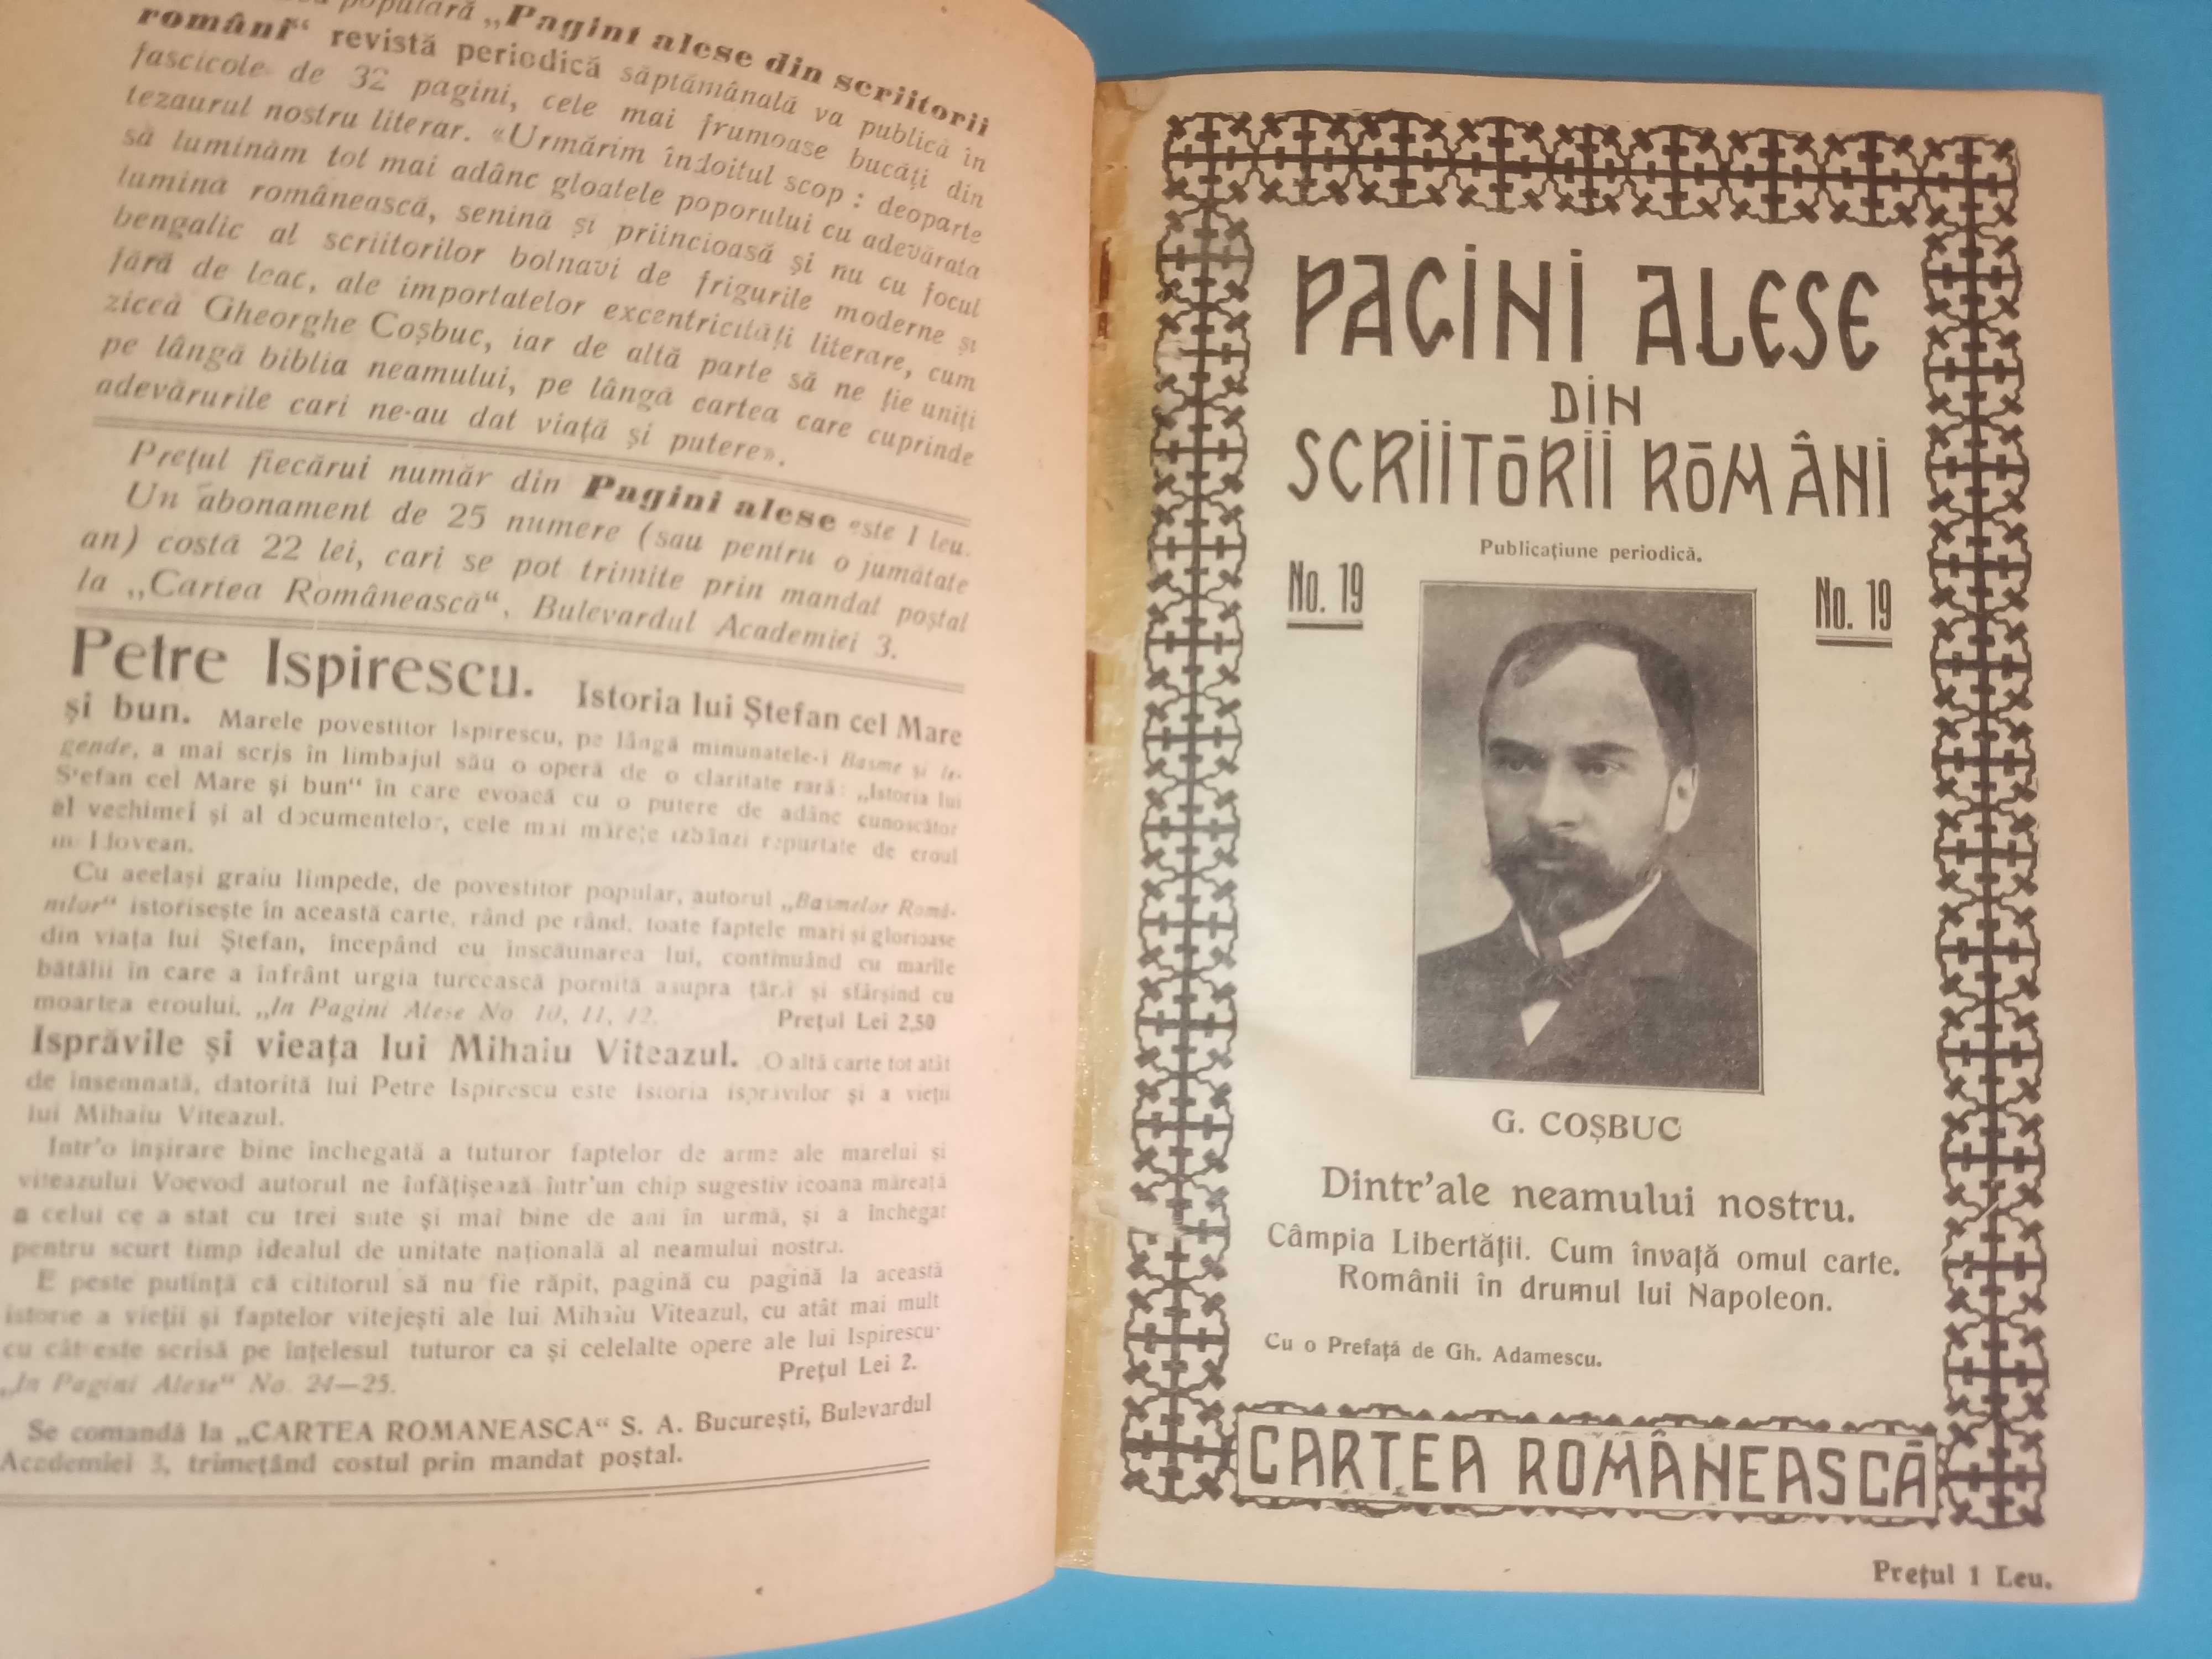 Pagini alese din scriitorii români vol. III Nr. 19-27 anul 1921